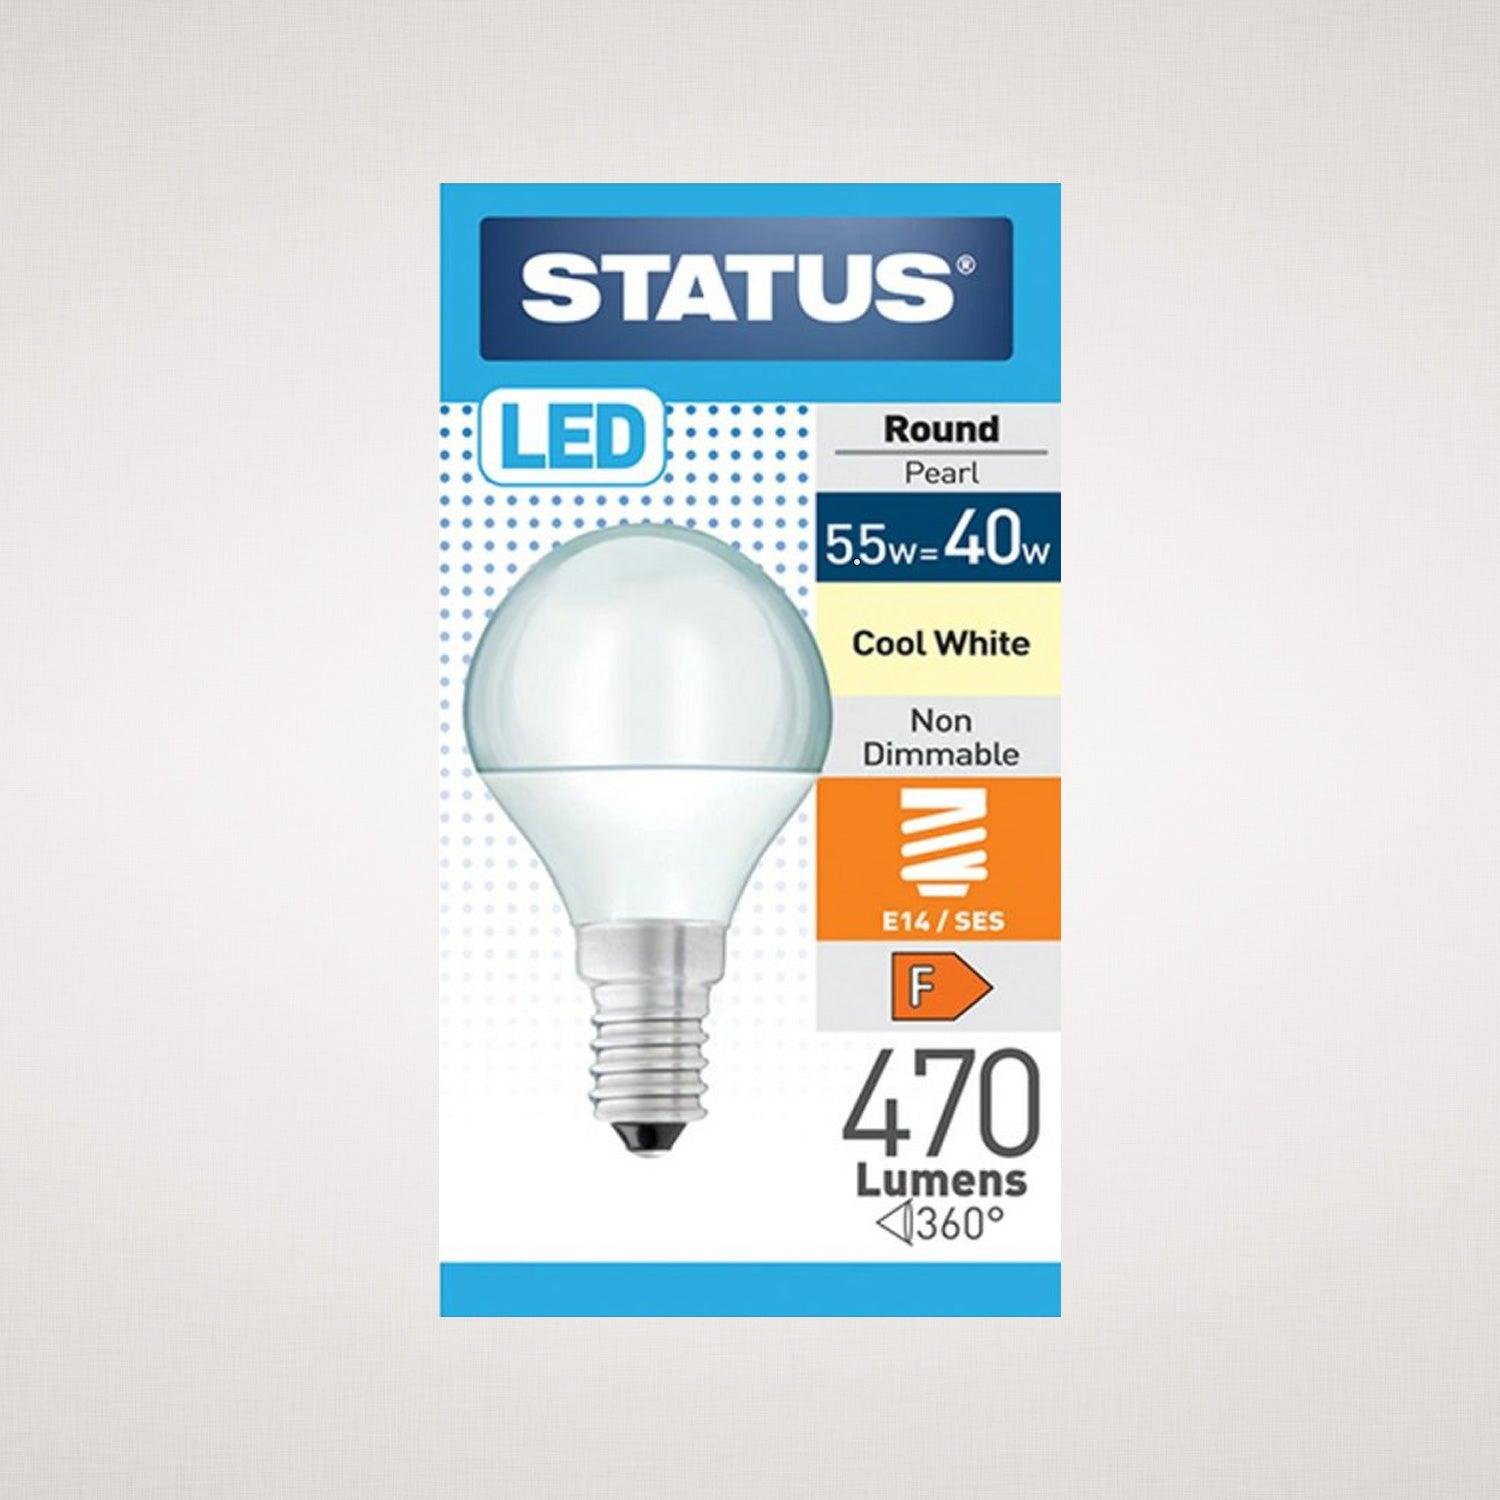 Status LED Round Pearl Bulb E14/SES 5.5w=40w - Cool White